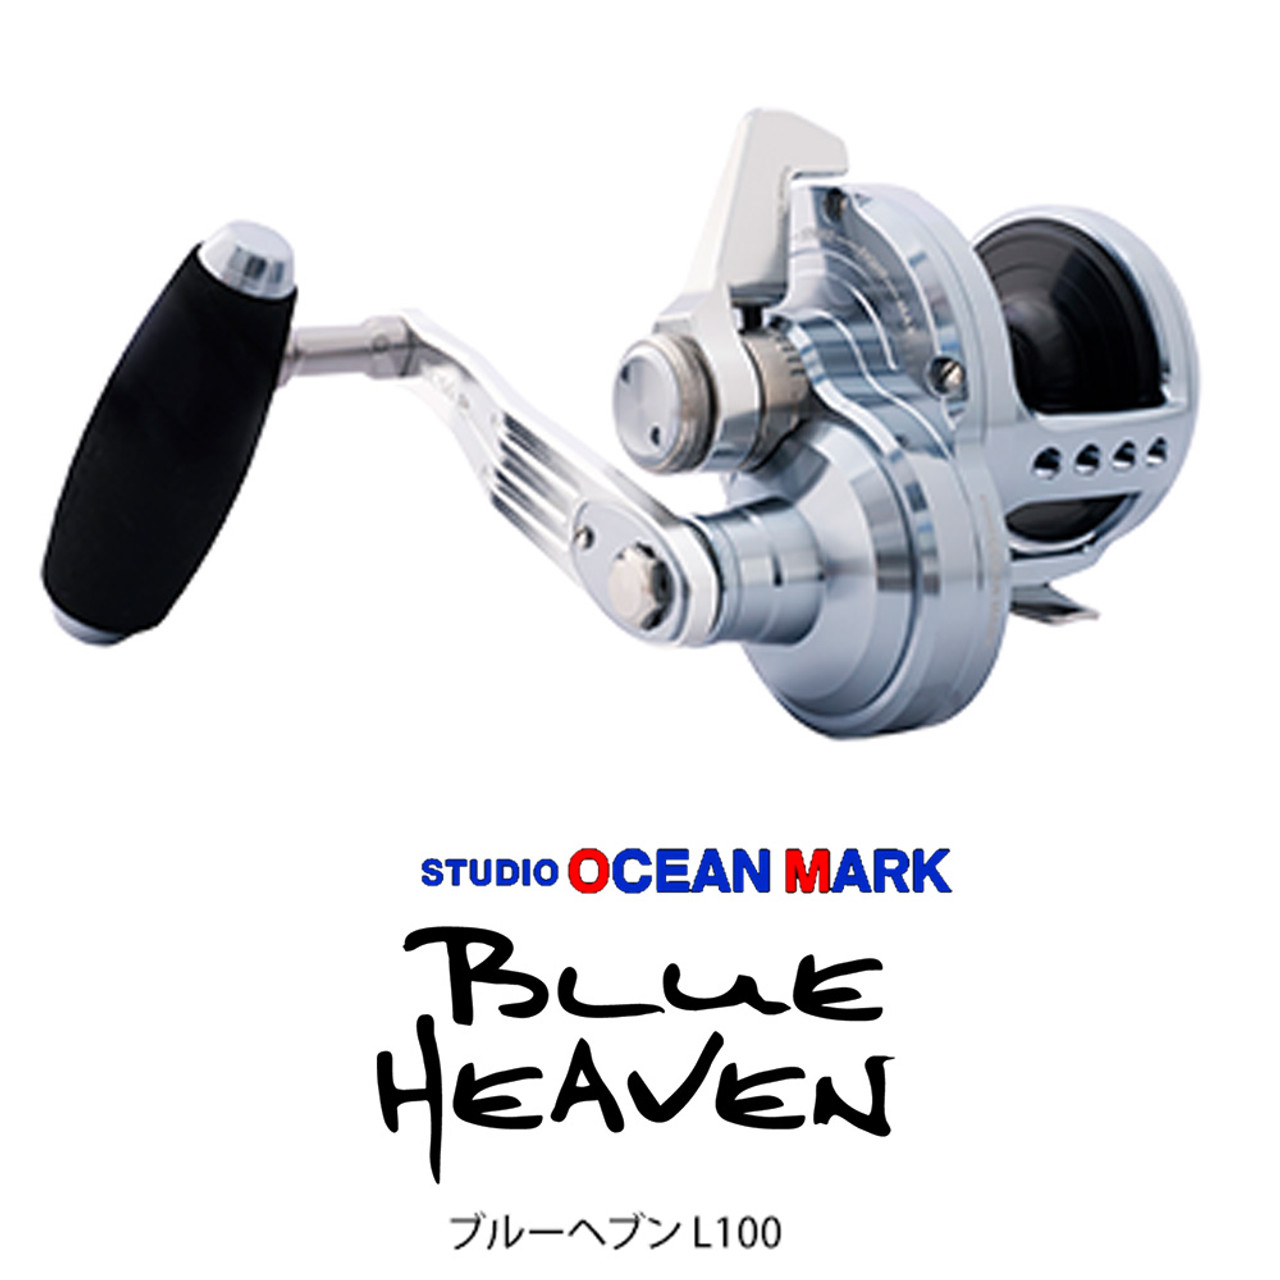 Studio Ocean Mark Blue Heaven L100 Lever Drag Conventional Reel